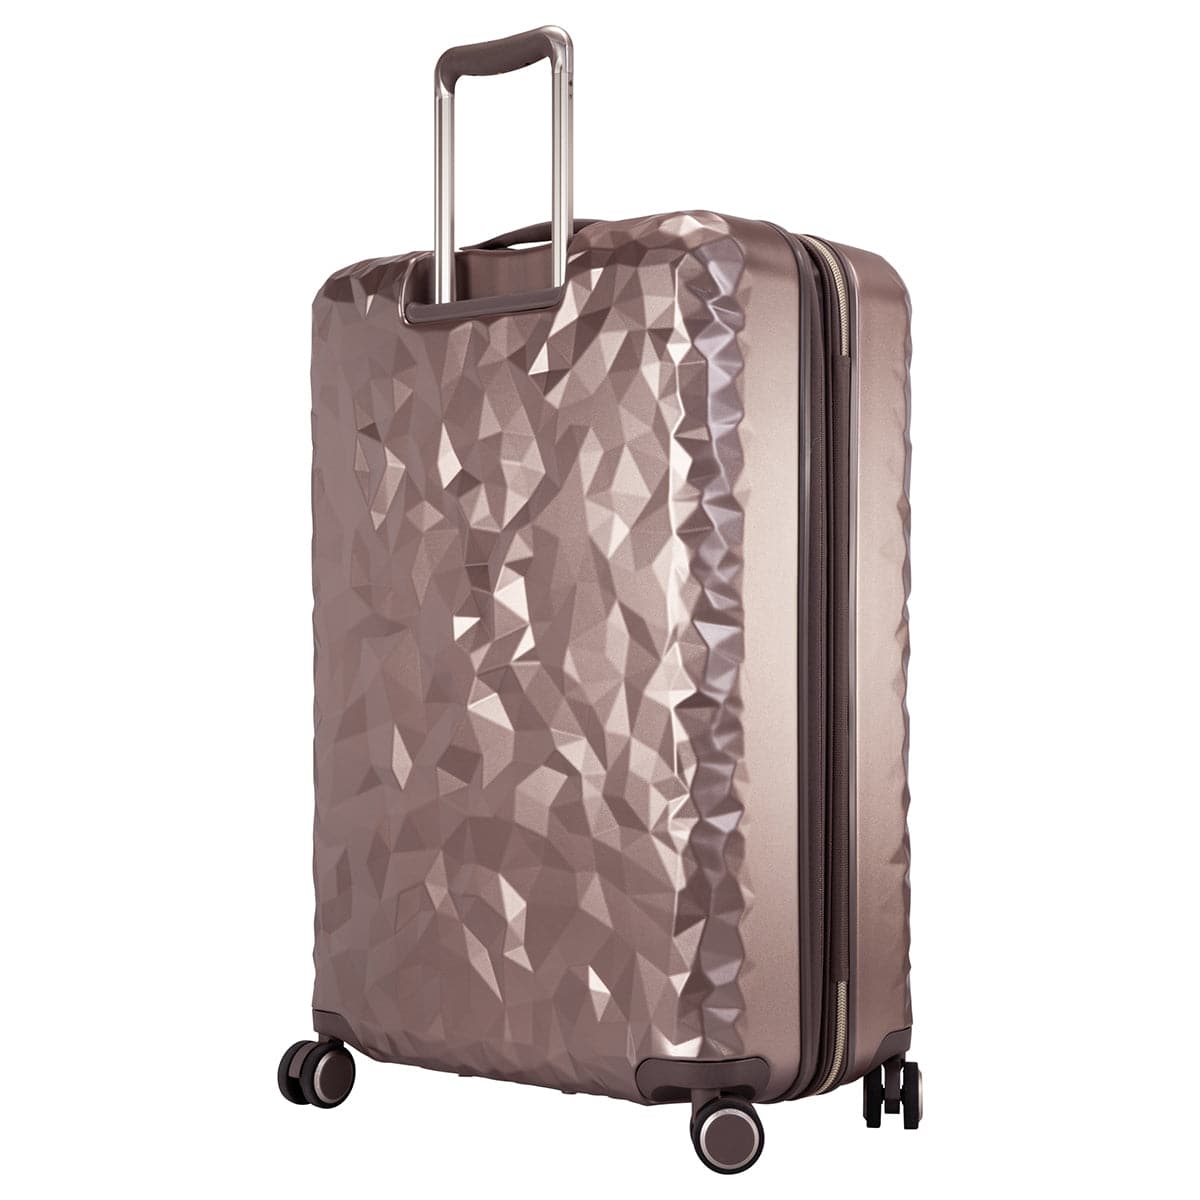 Ricardo Beverly Hills Indio Medium Check-In Suitcase Luggage